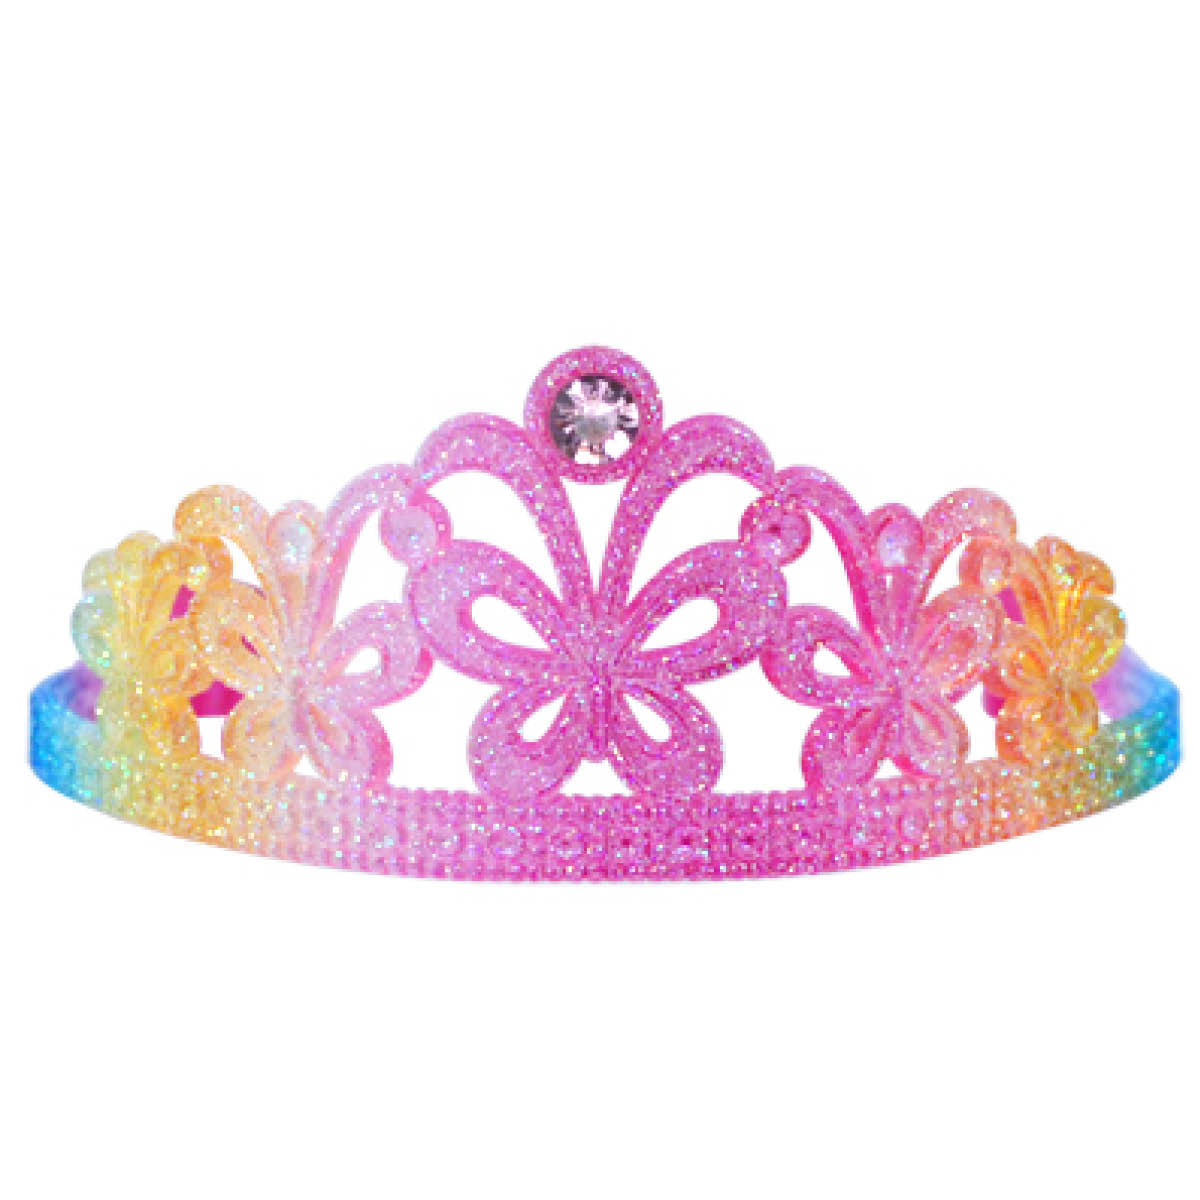 Rainbow tiara